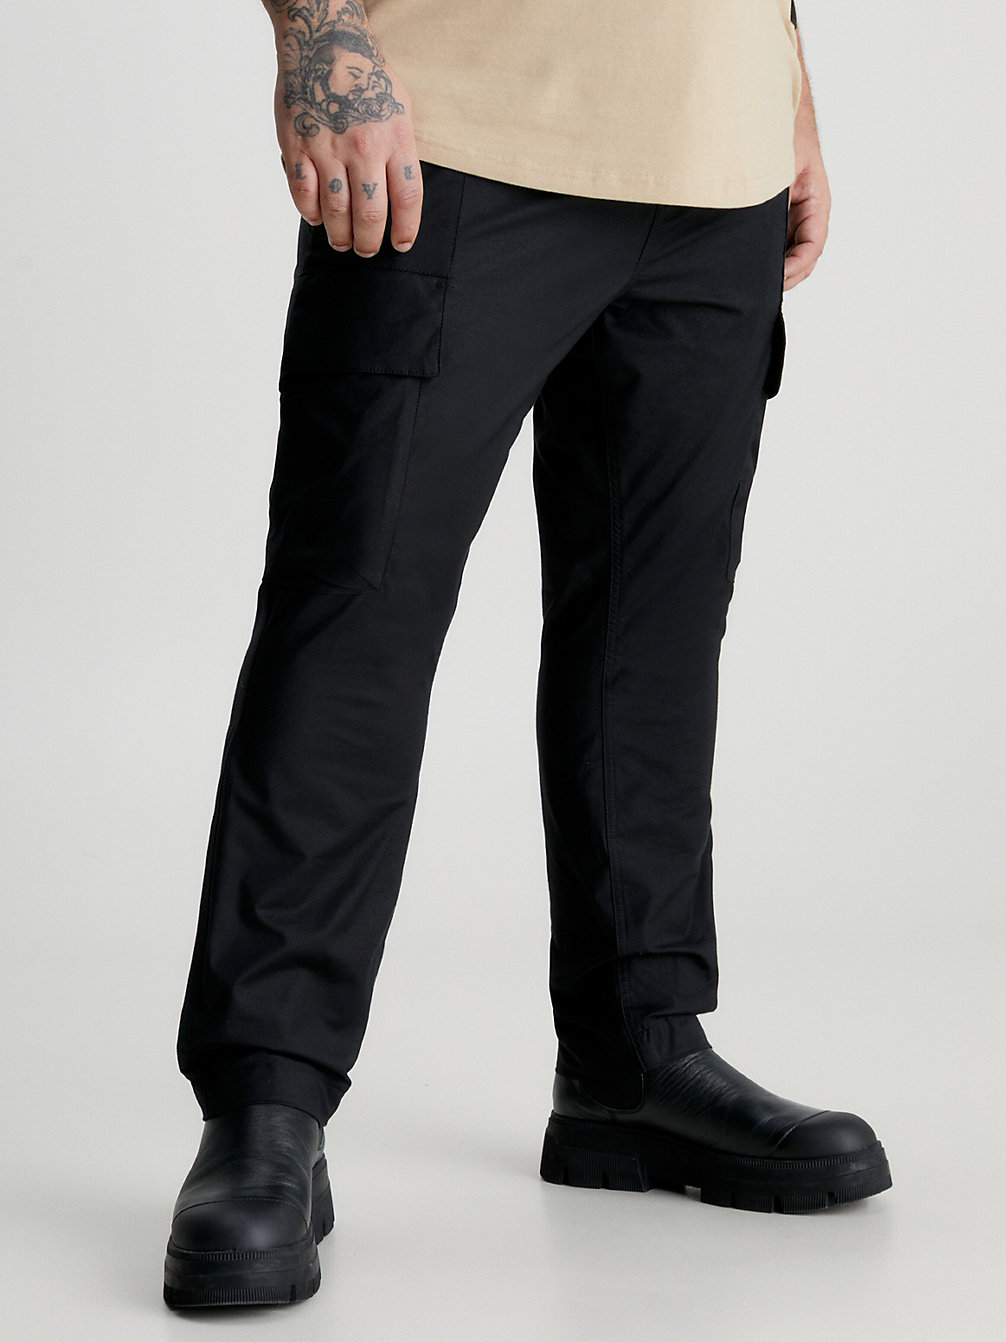 CK BLACK Plus Size Skinny Cargo Pants undefined men Calvin Klein